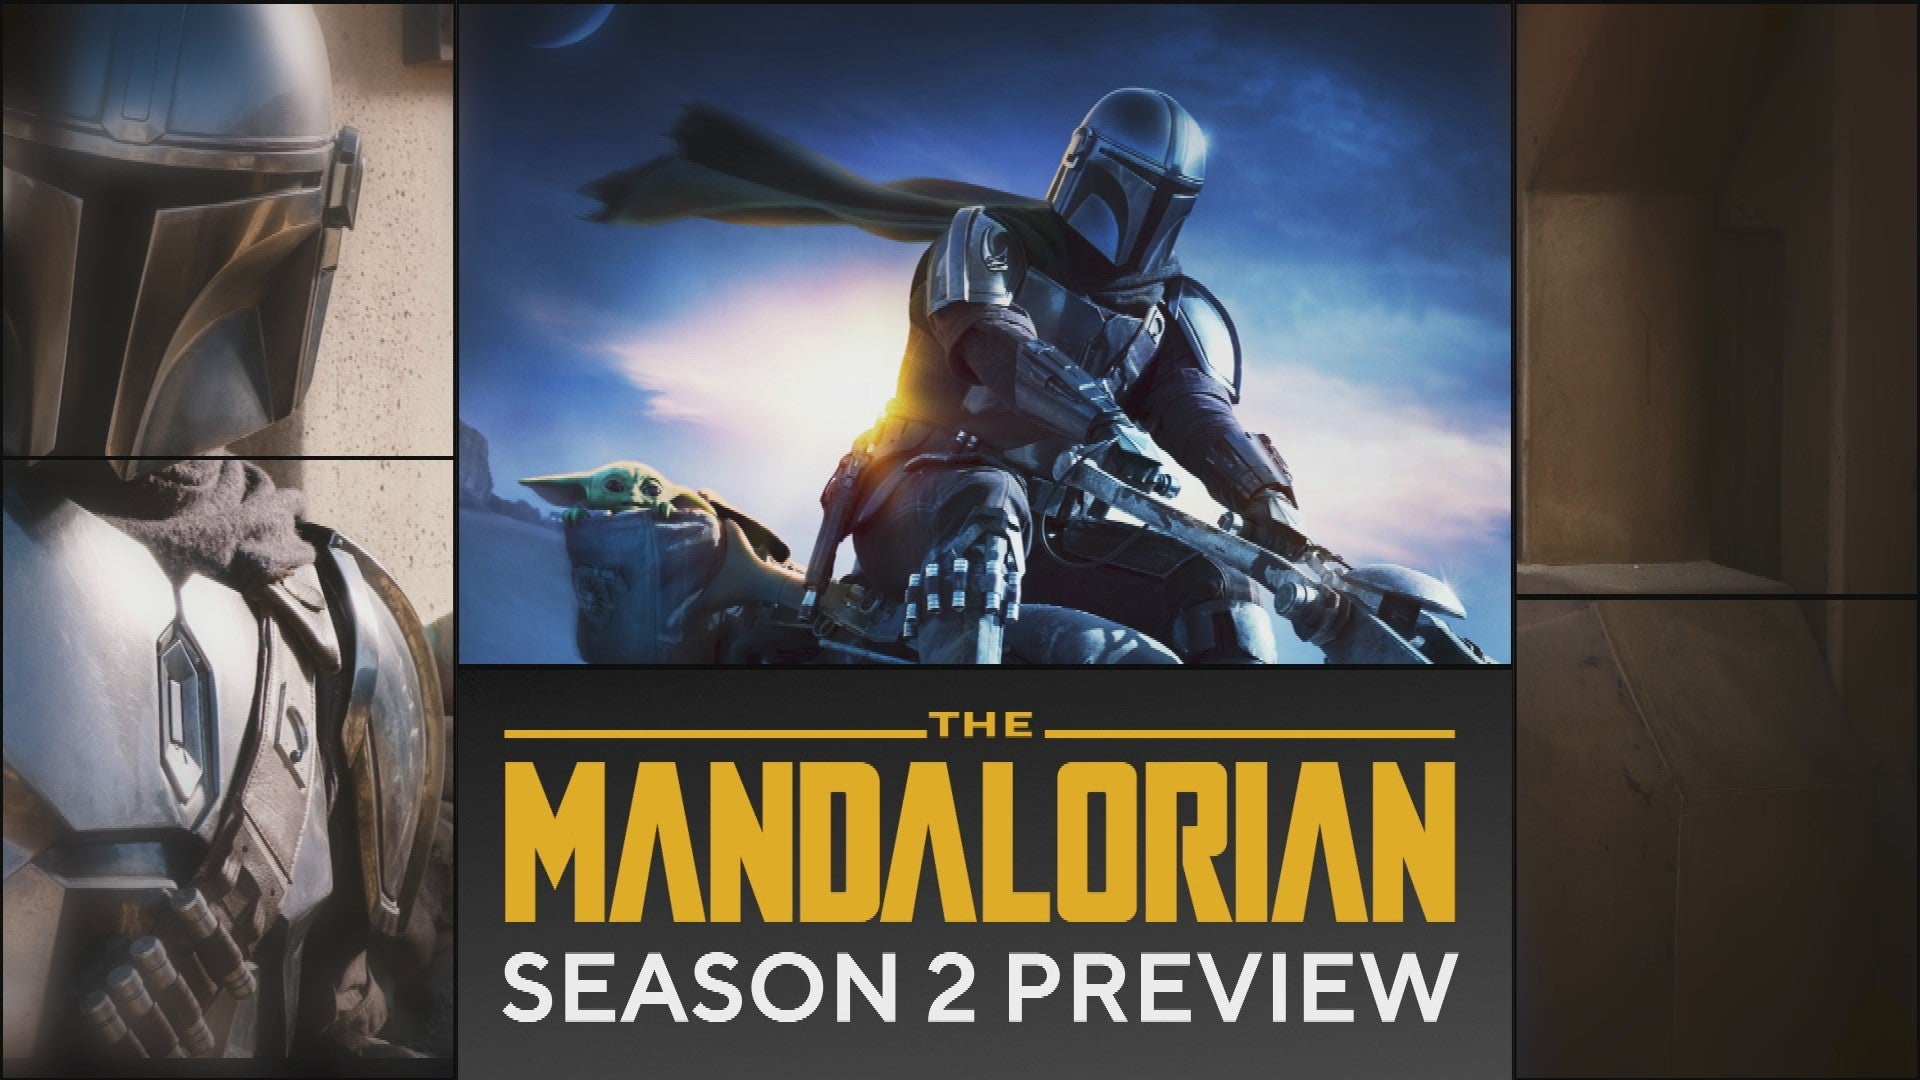 The Mandalorian season 2 reveals its biggest surprise yet